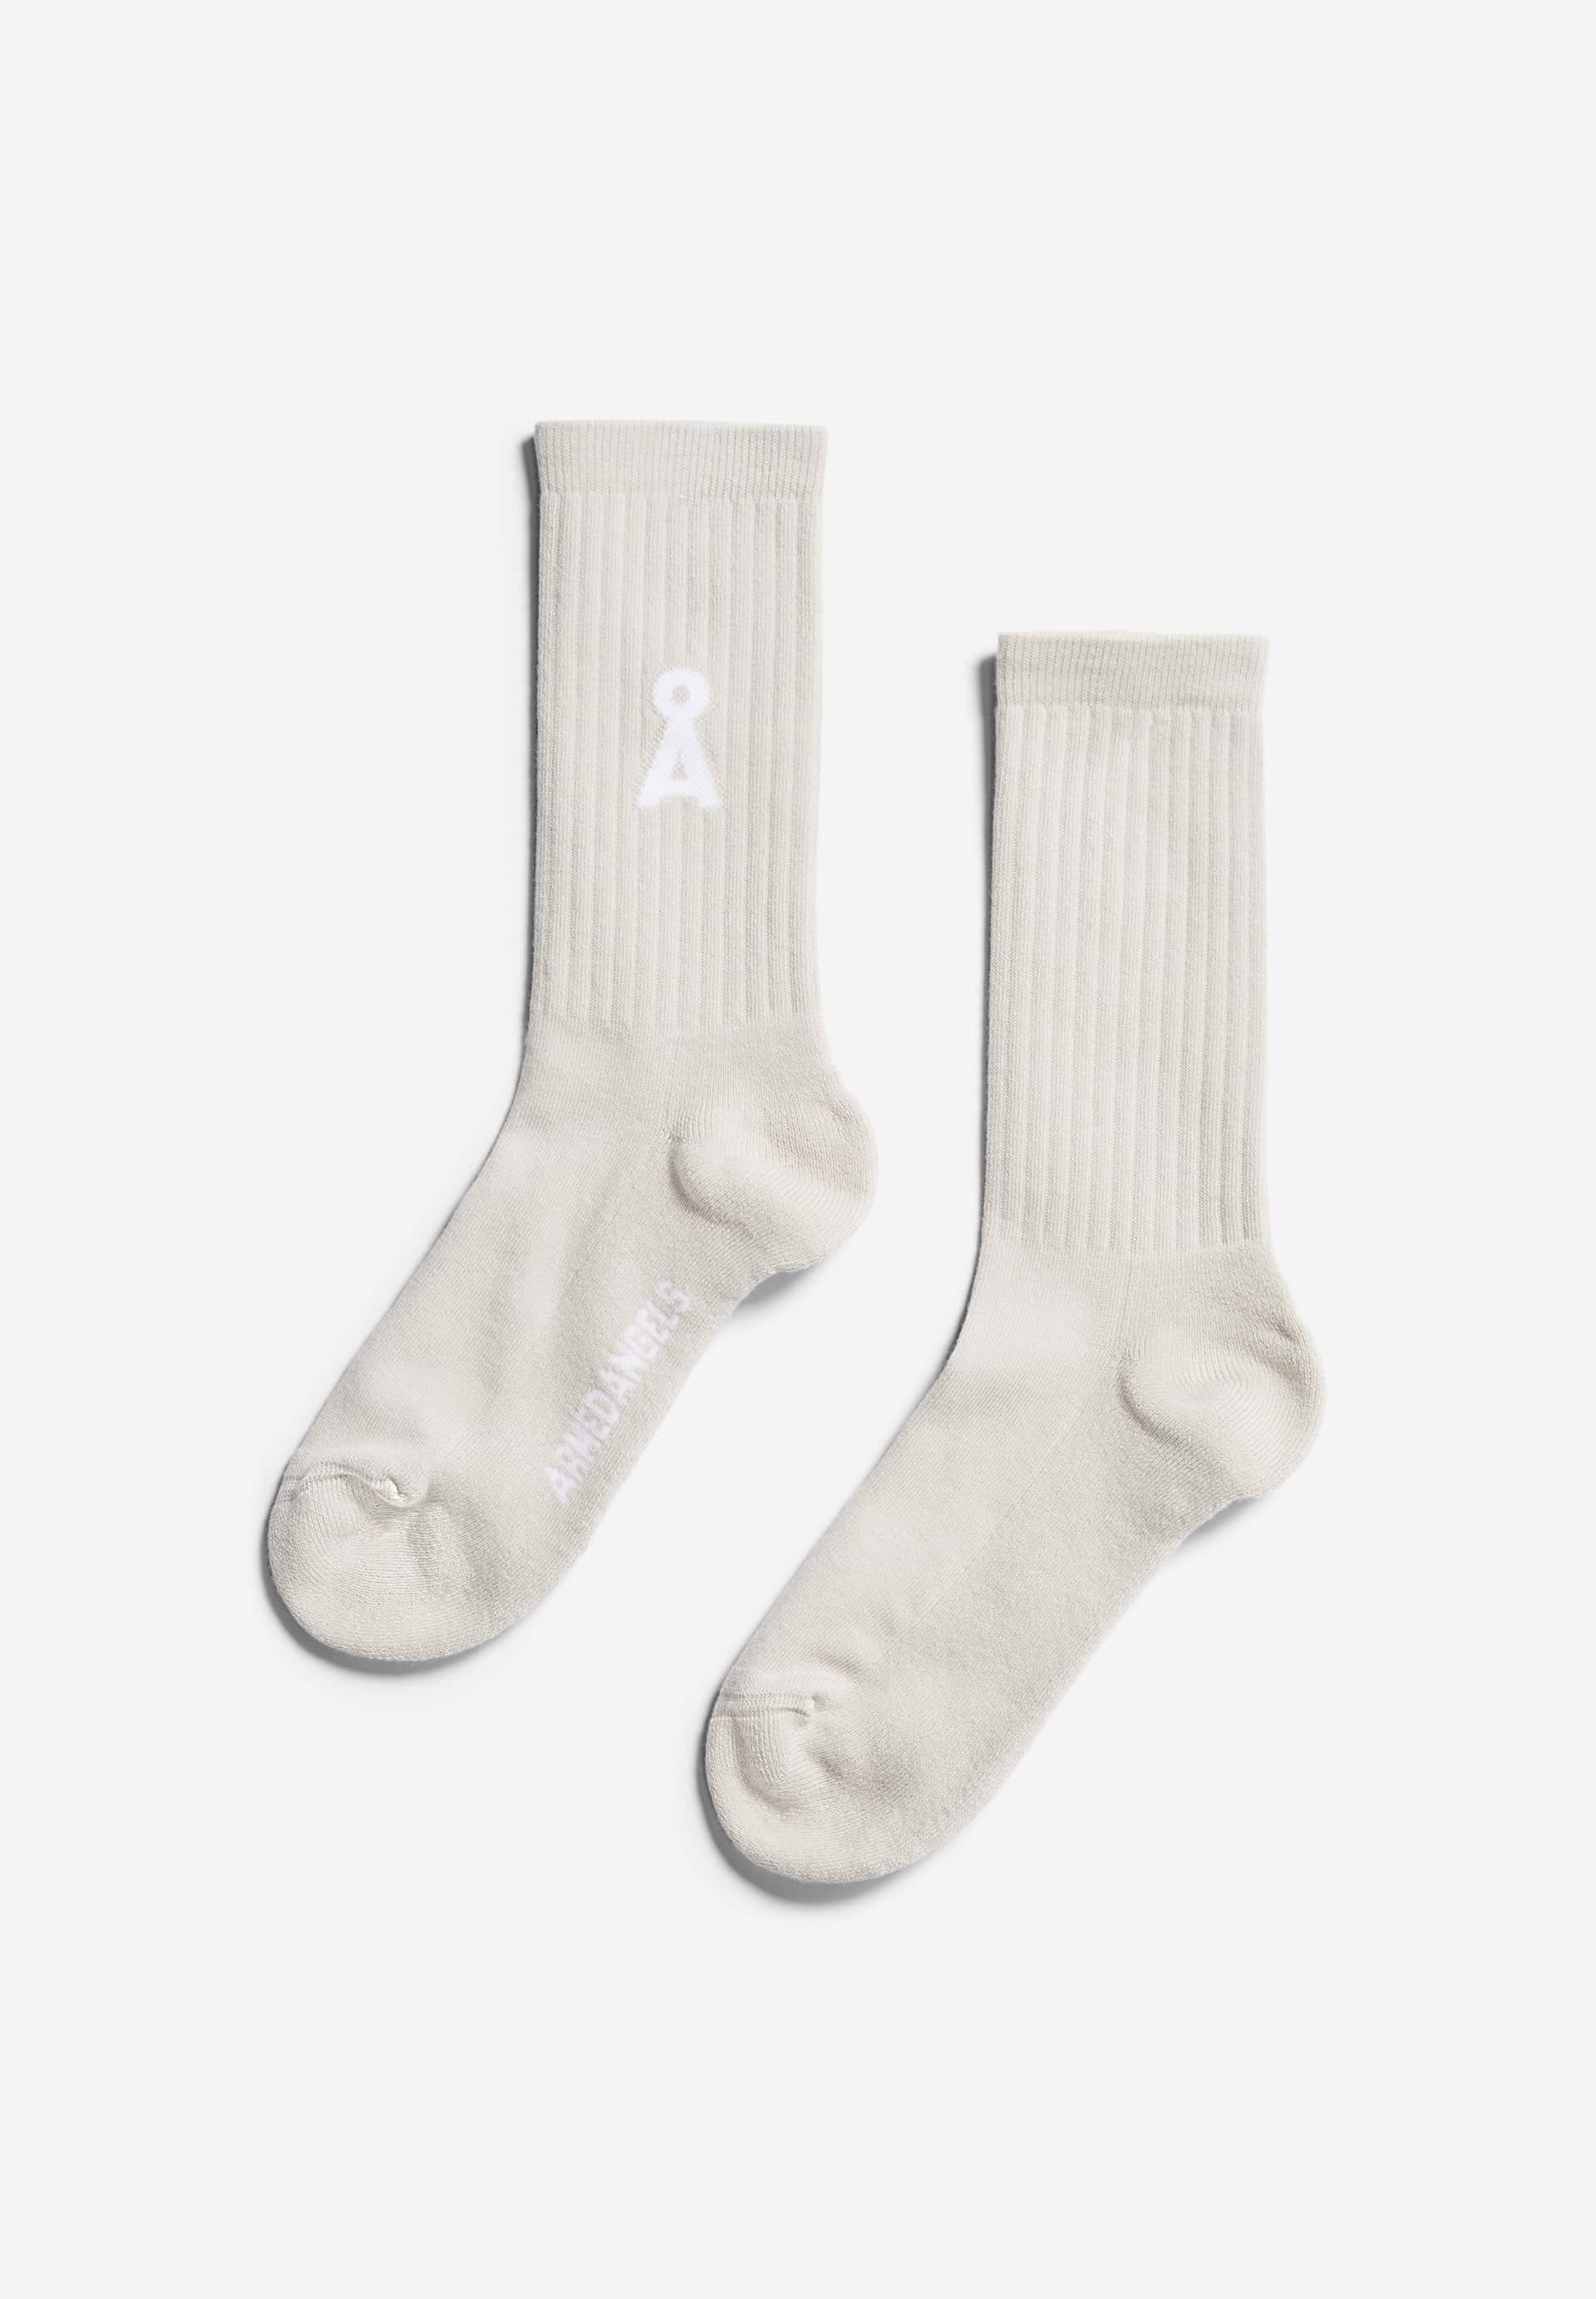 SAAMUS BOLD Socks made of Organic Cotton Mix